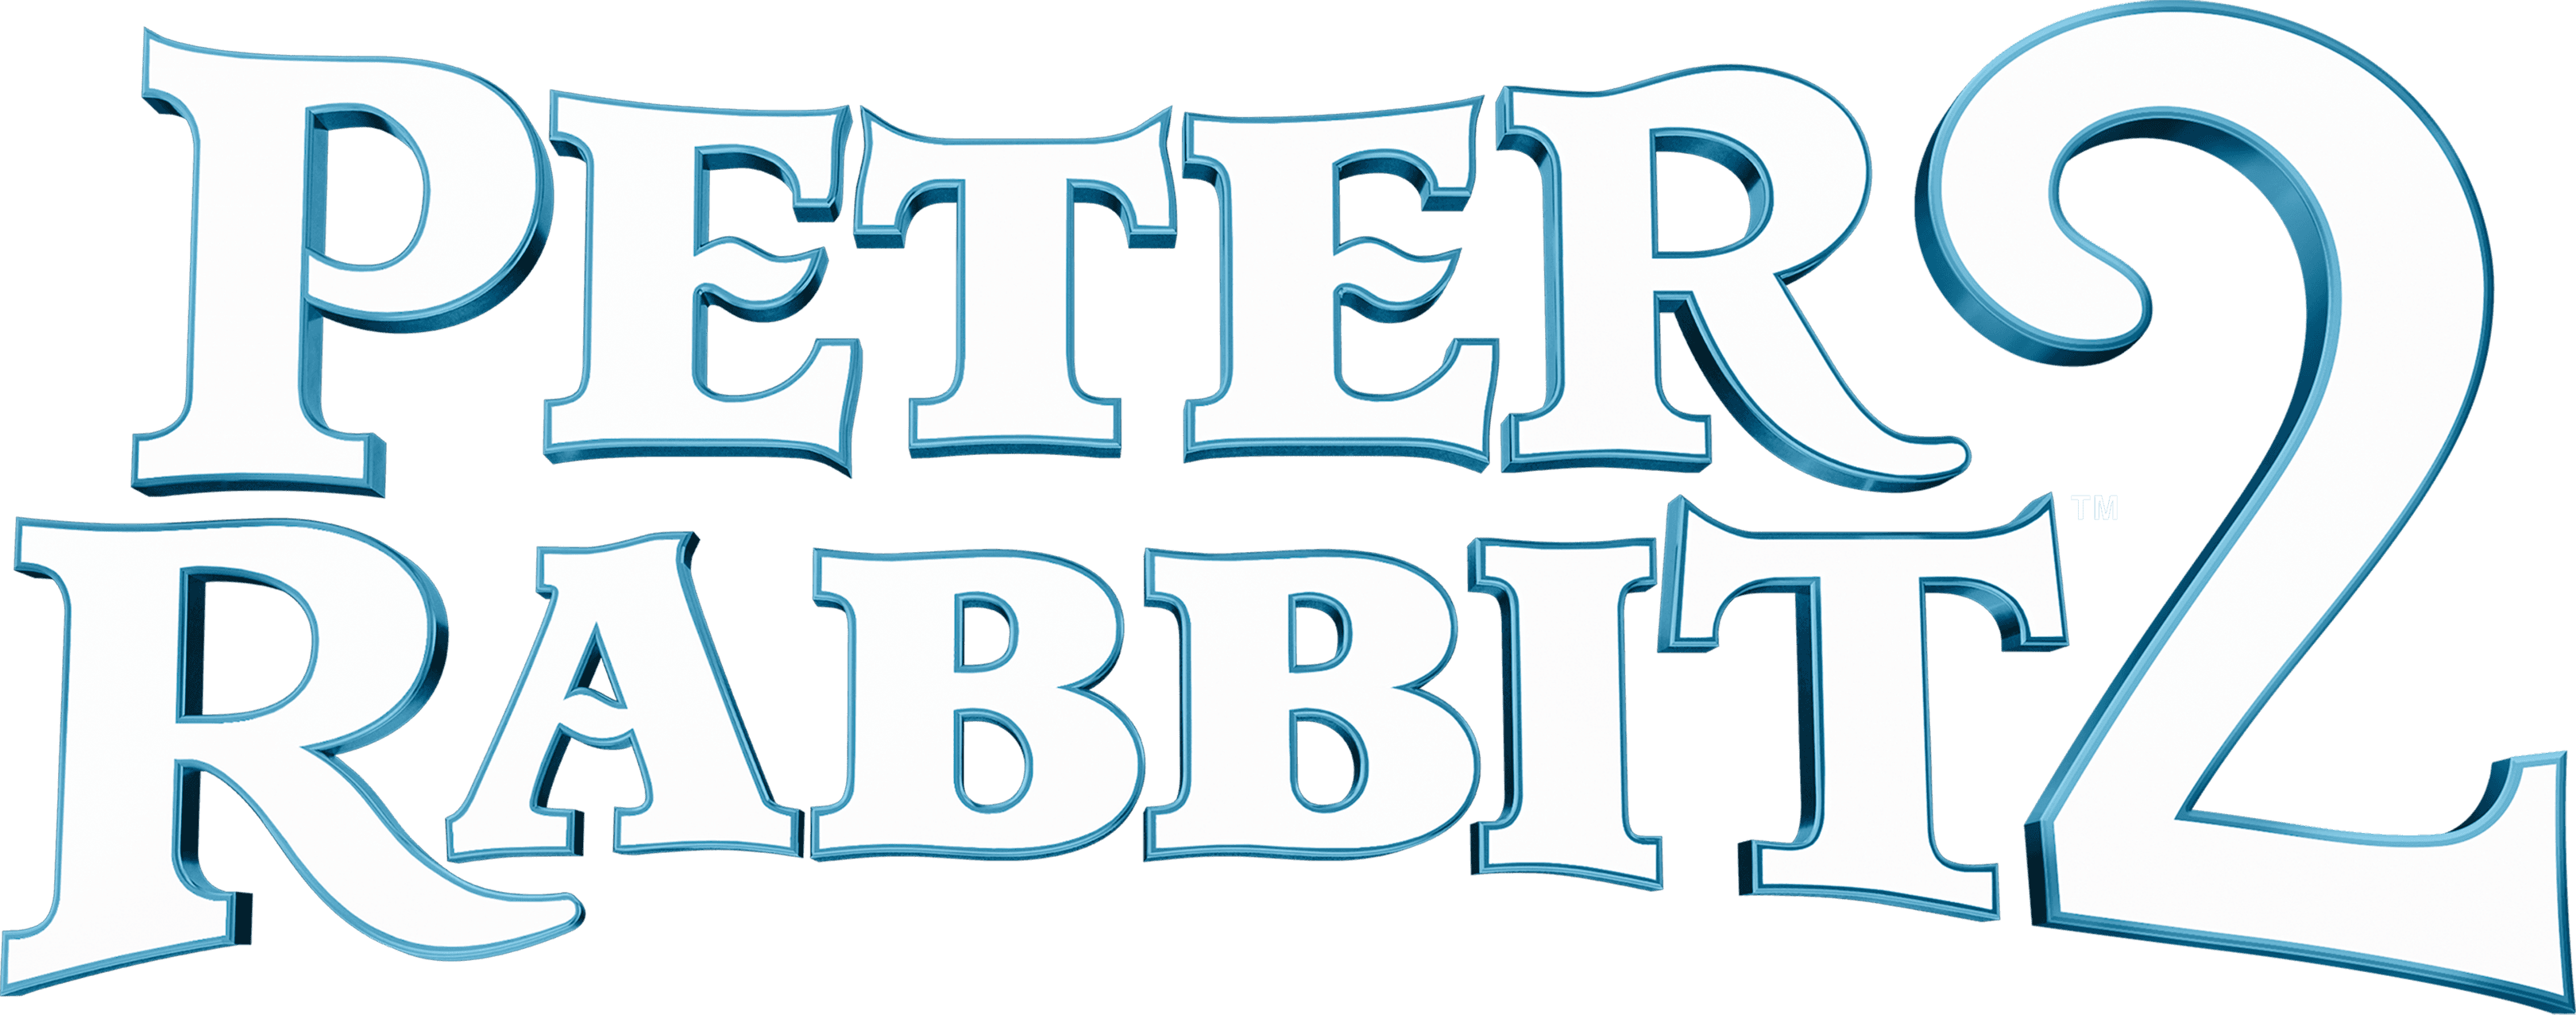 Peter Rabbit 2: The Runaway logo